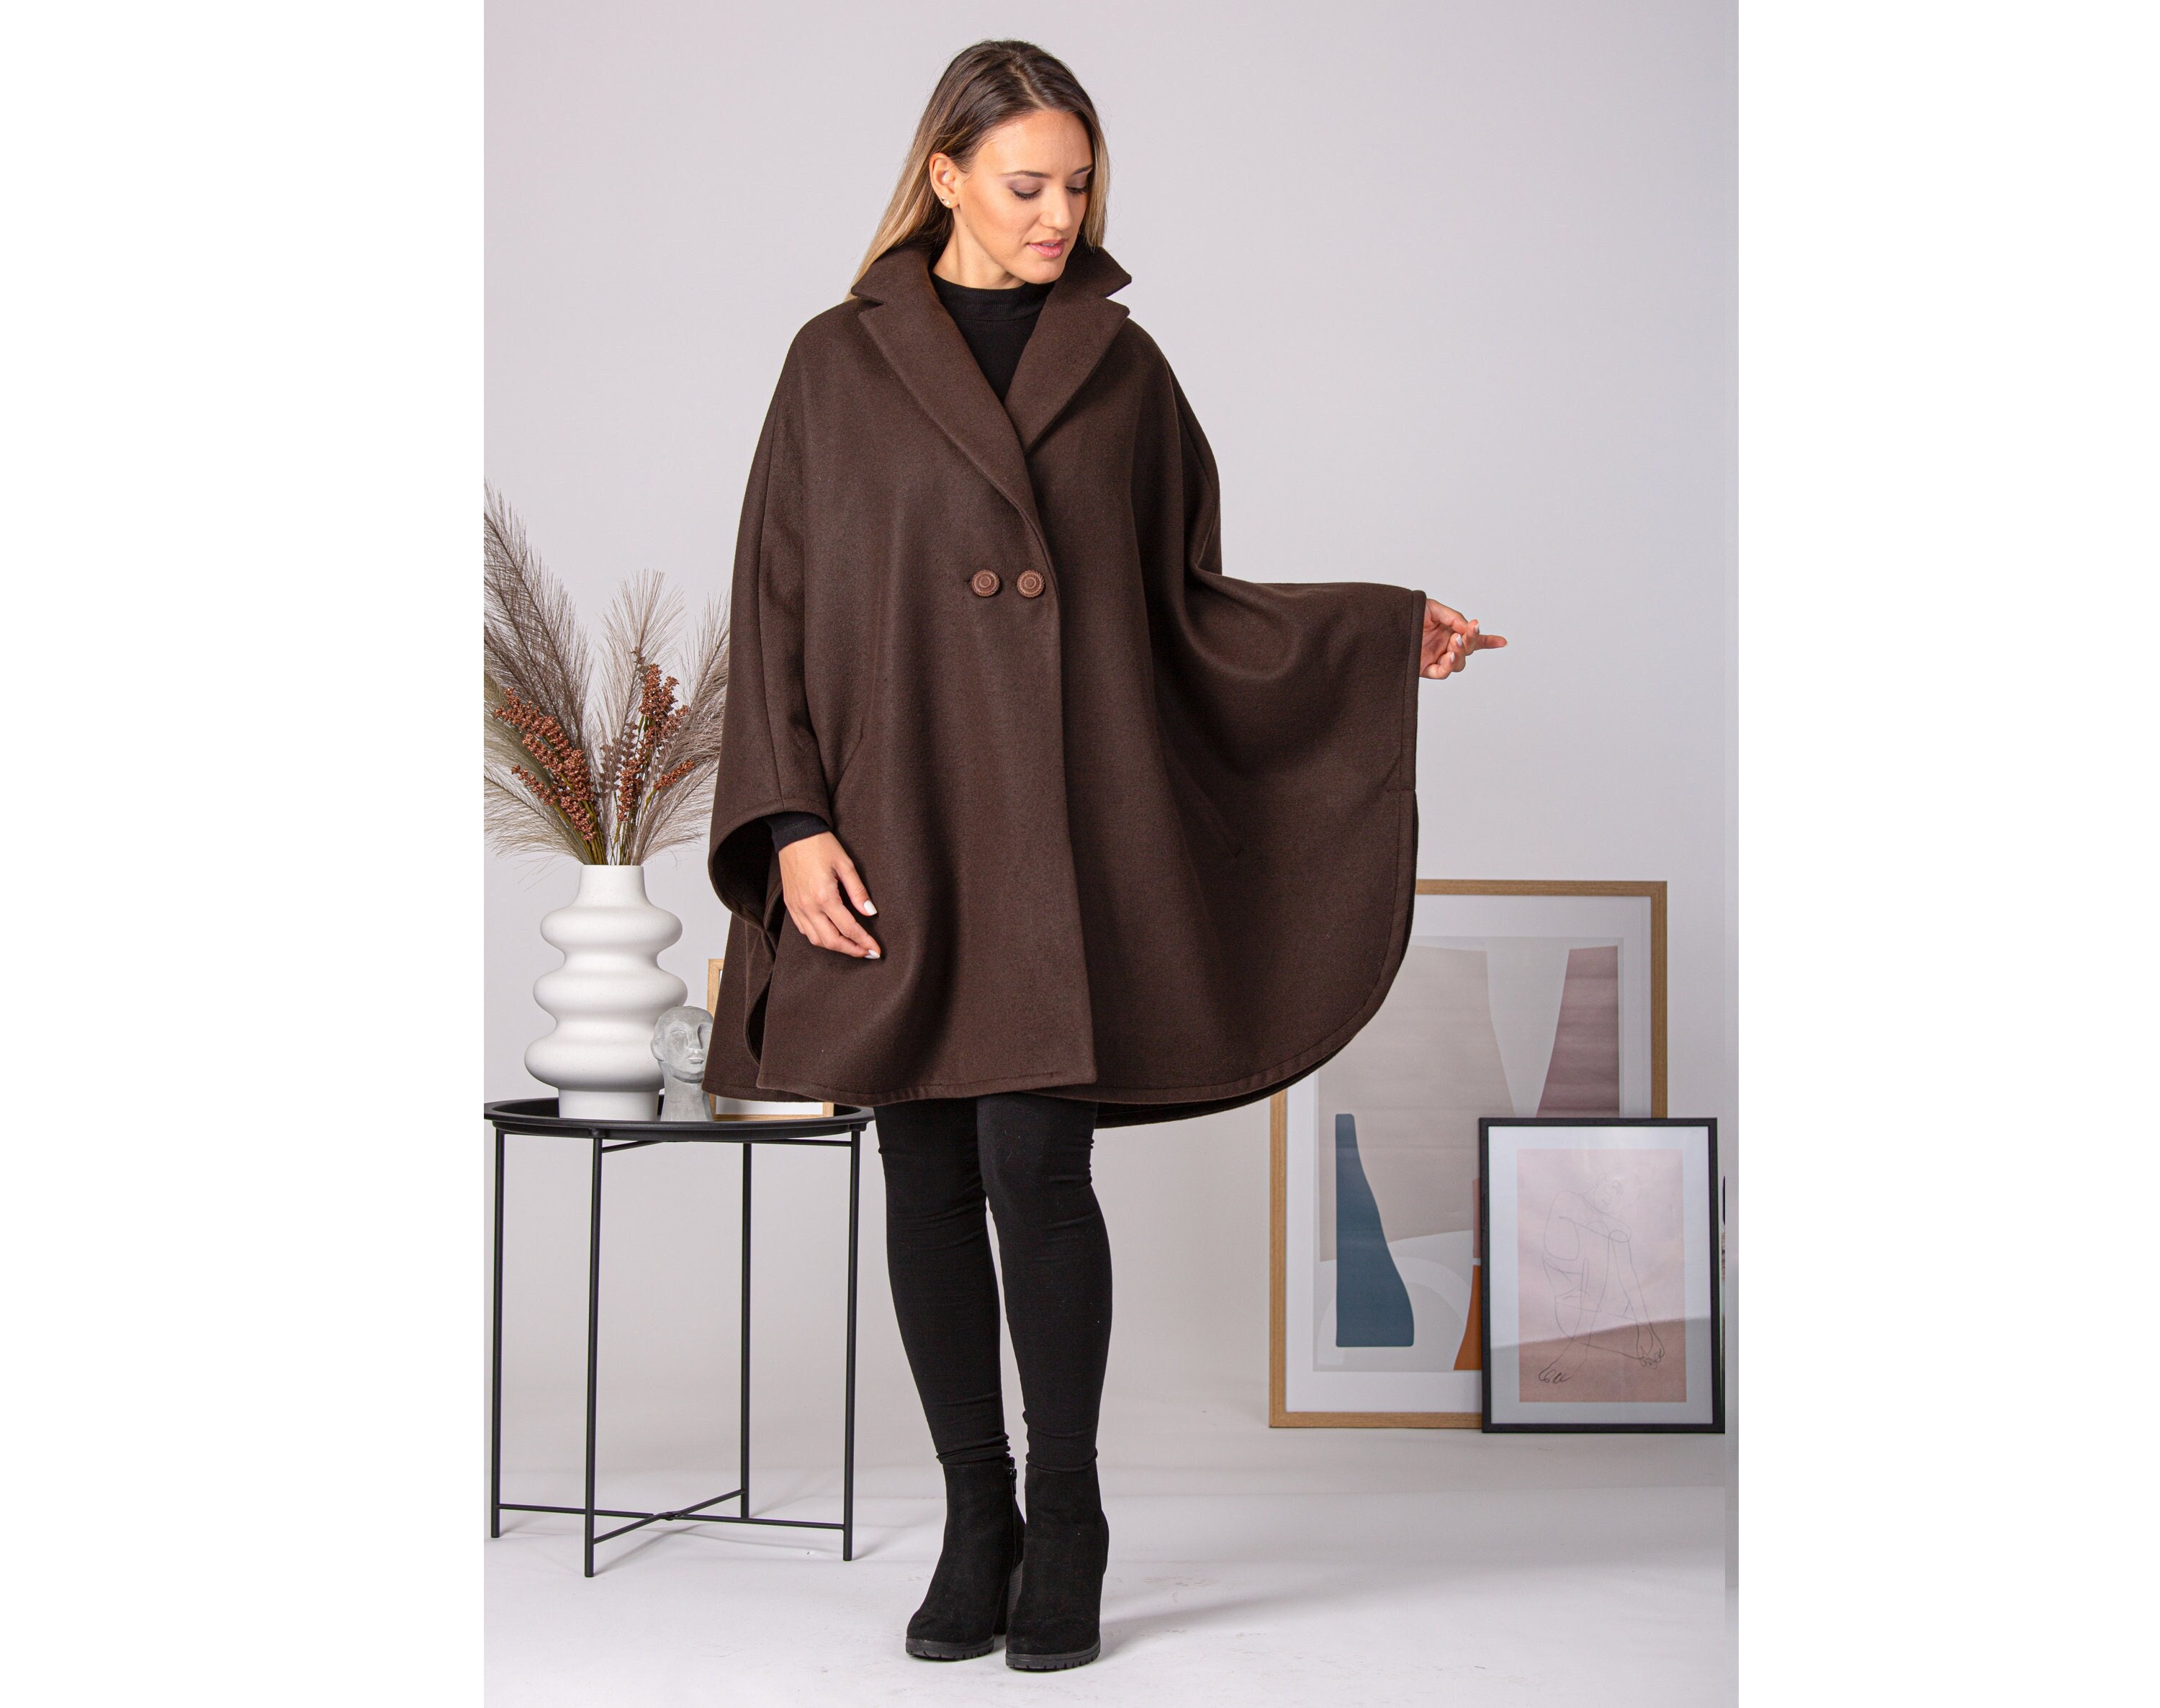 Reklame vold komponist Winter Wool Cape Coat Plus Size Poncho Jacket Coat Oversized - Etsy